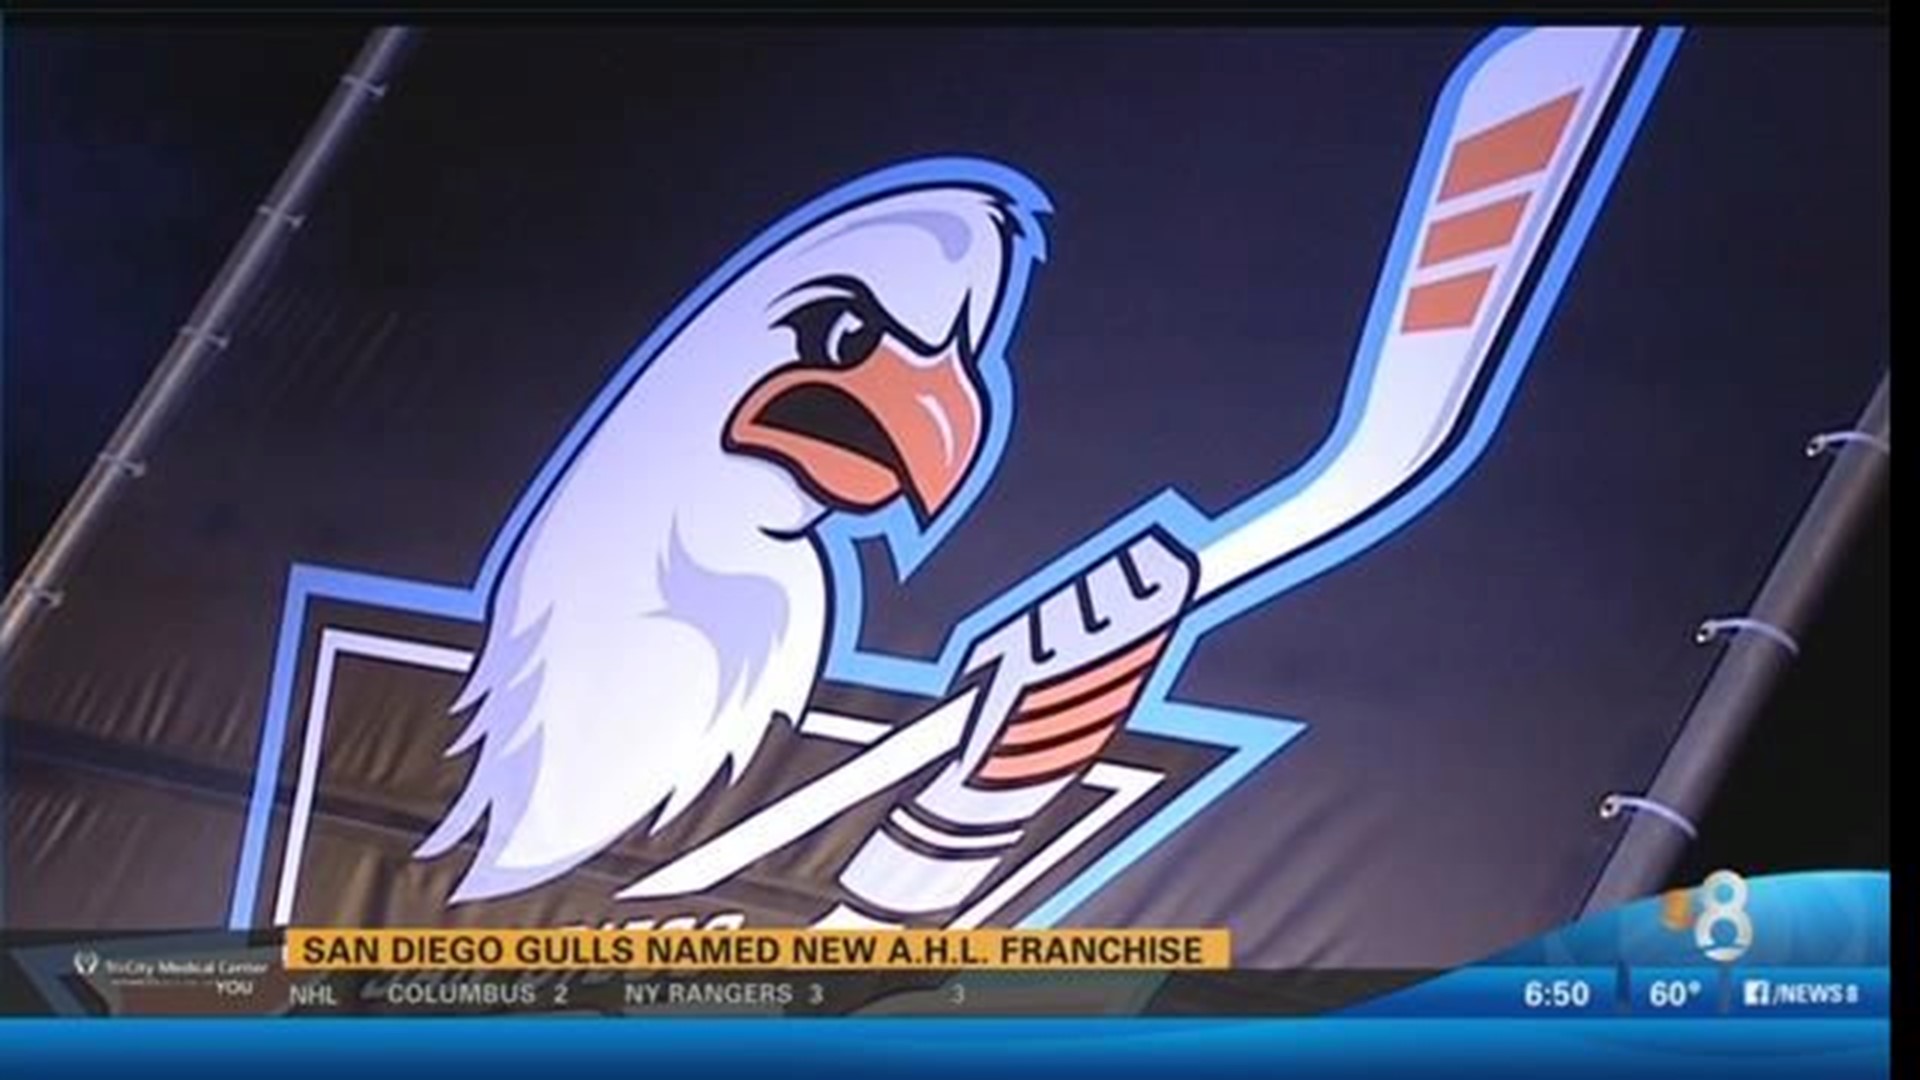 San Diego Gulls on X: Watch the newest episode of Gulls All